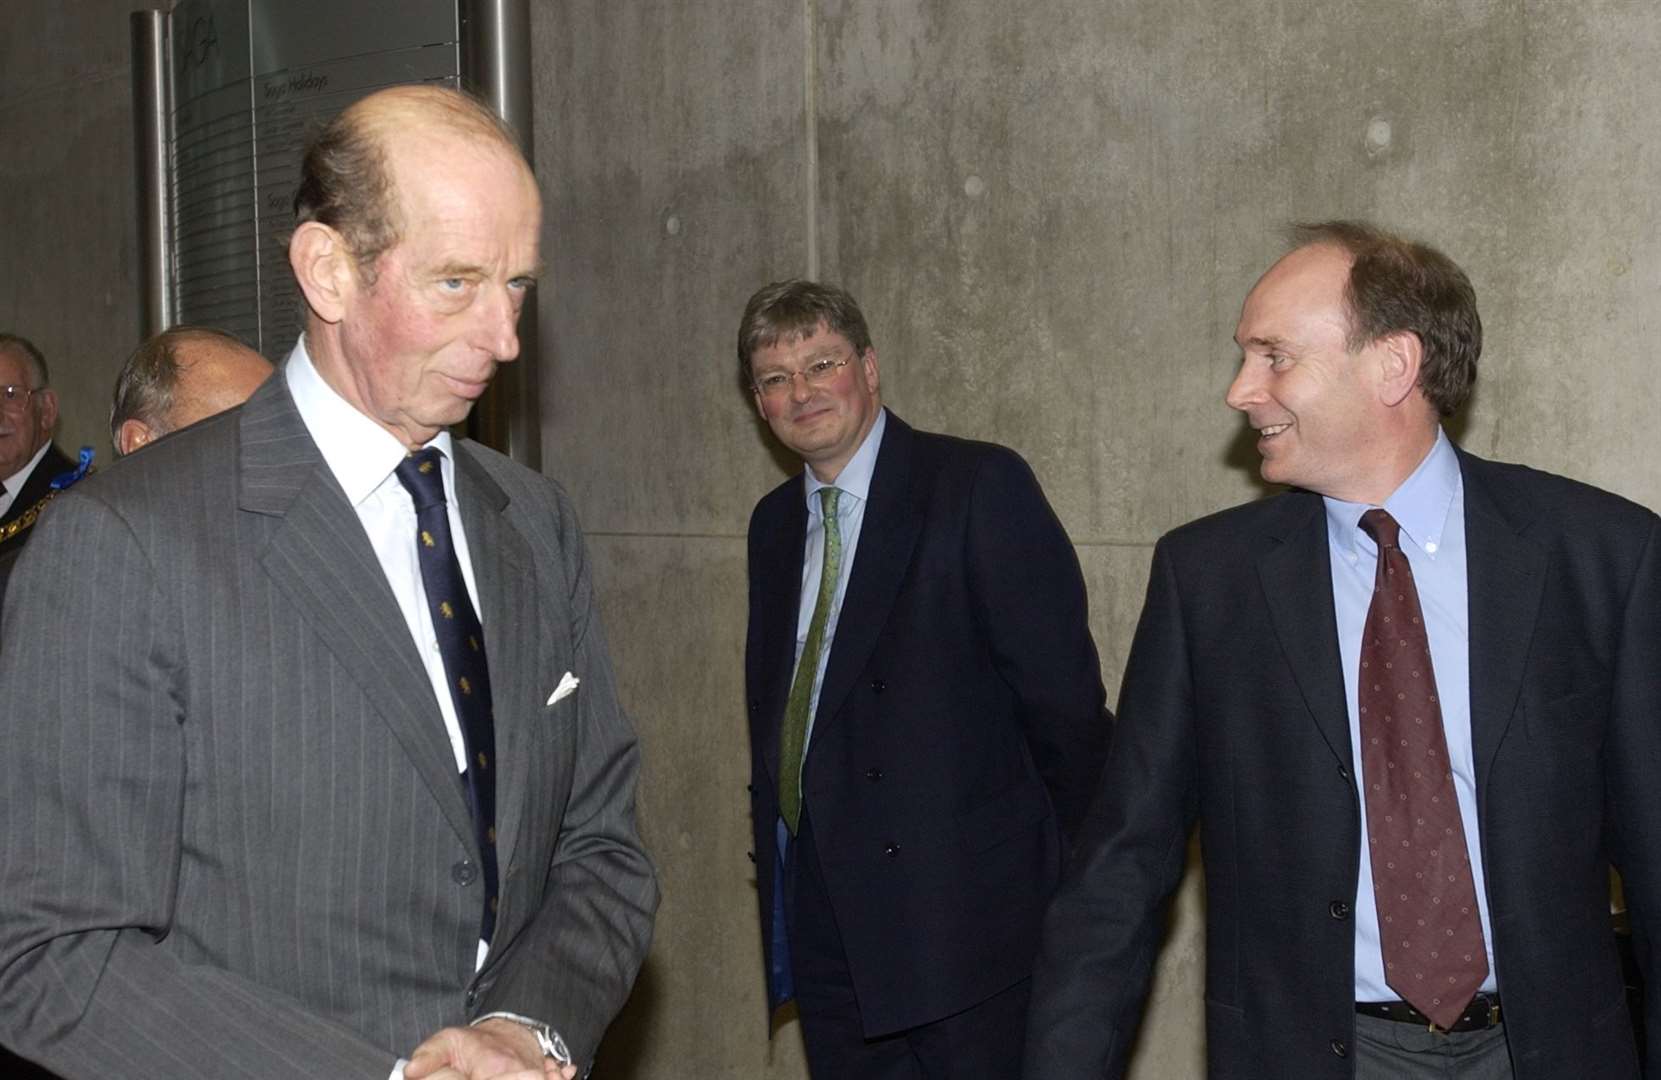 The Duke of Kent is welcomed to Saga by Roger De Haan in 2002